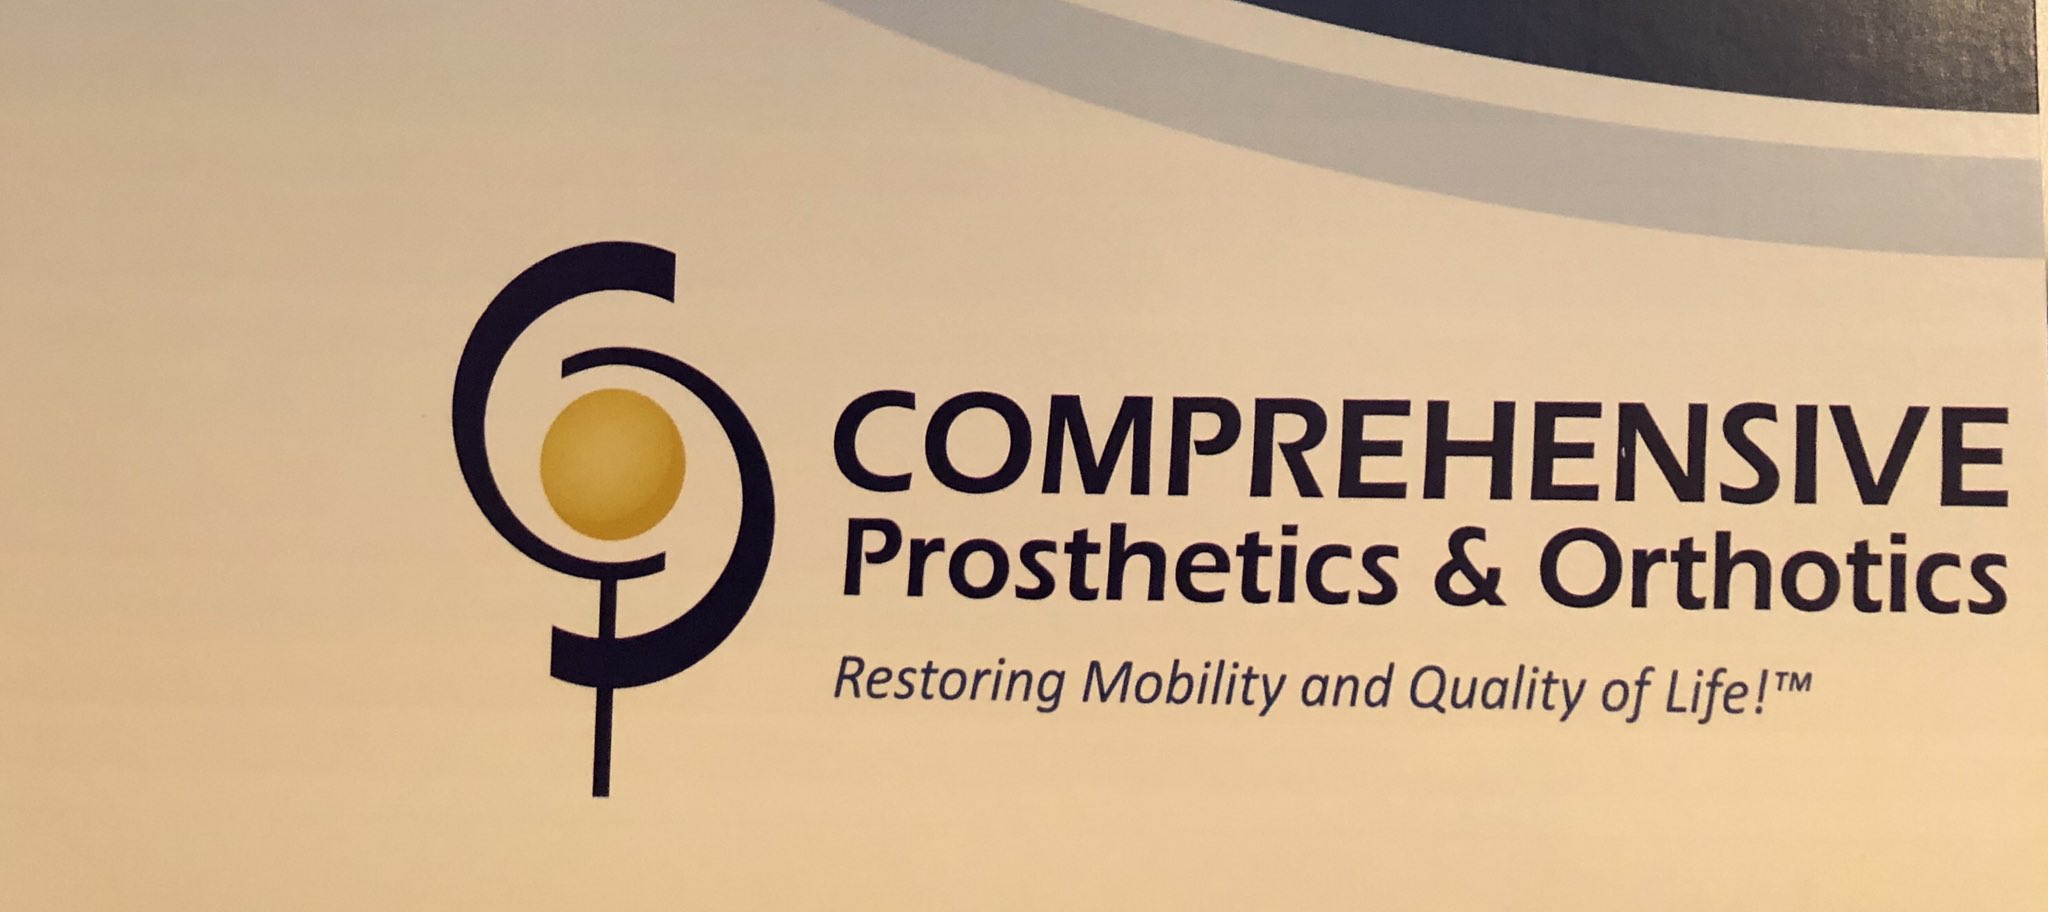 Orthotics – Comprehensive Prosthetics & Orthotics